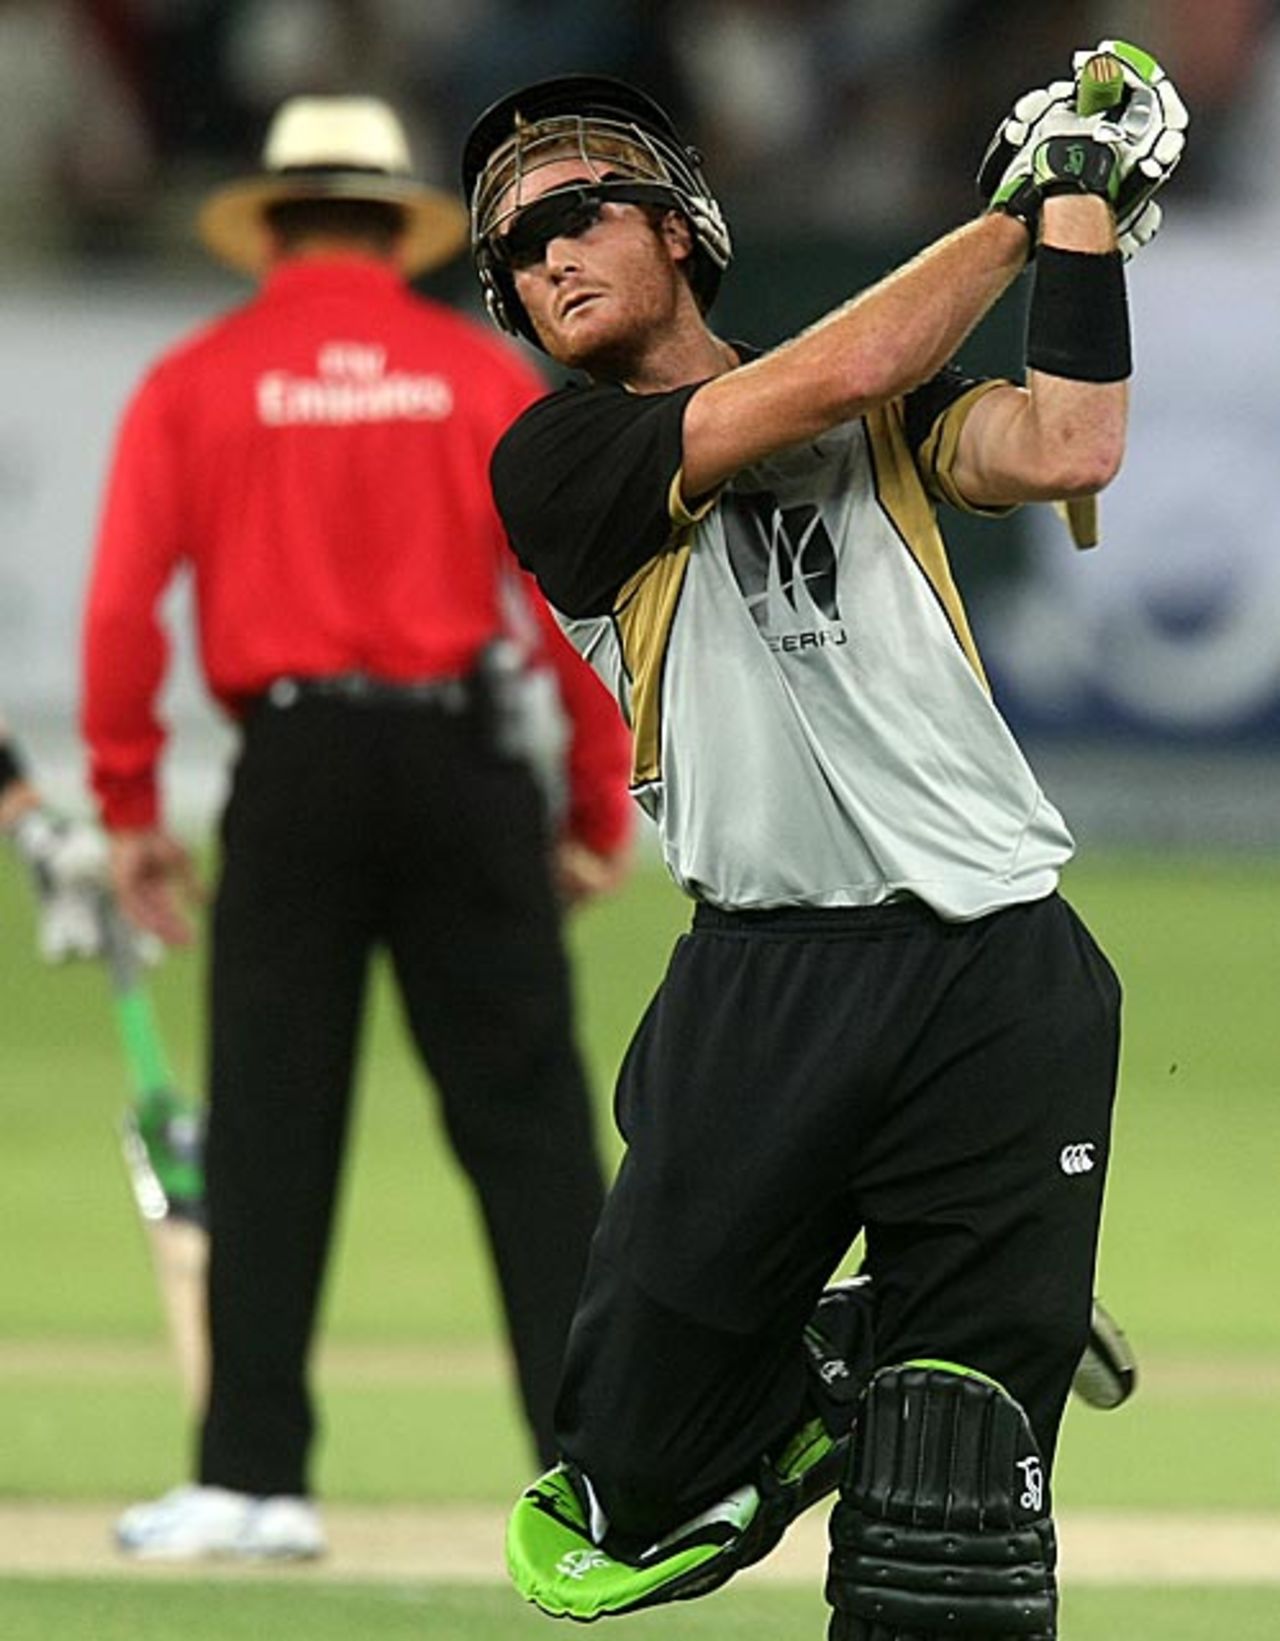 Martin Guptill reacts after being dismissed, New Zealand v Pakistan, 1st Twenty20 International, Dubai, November 12, 2009